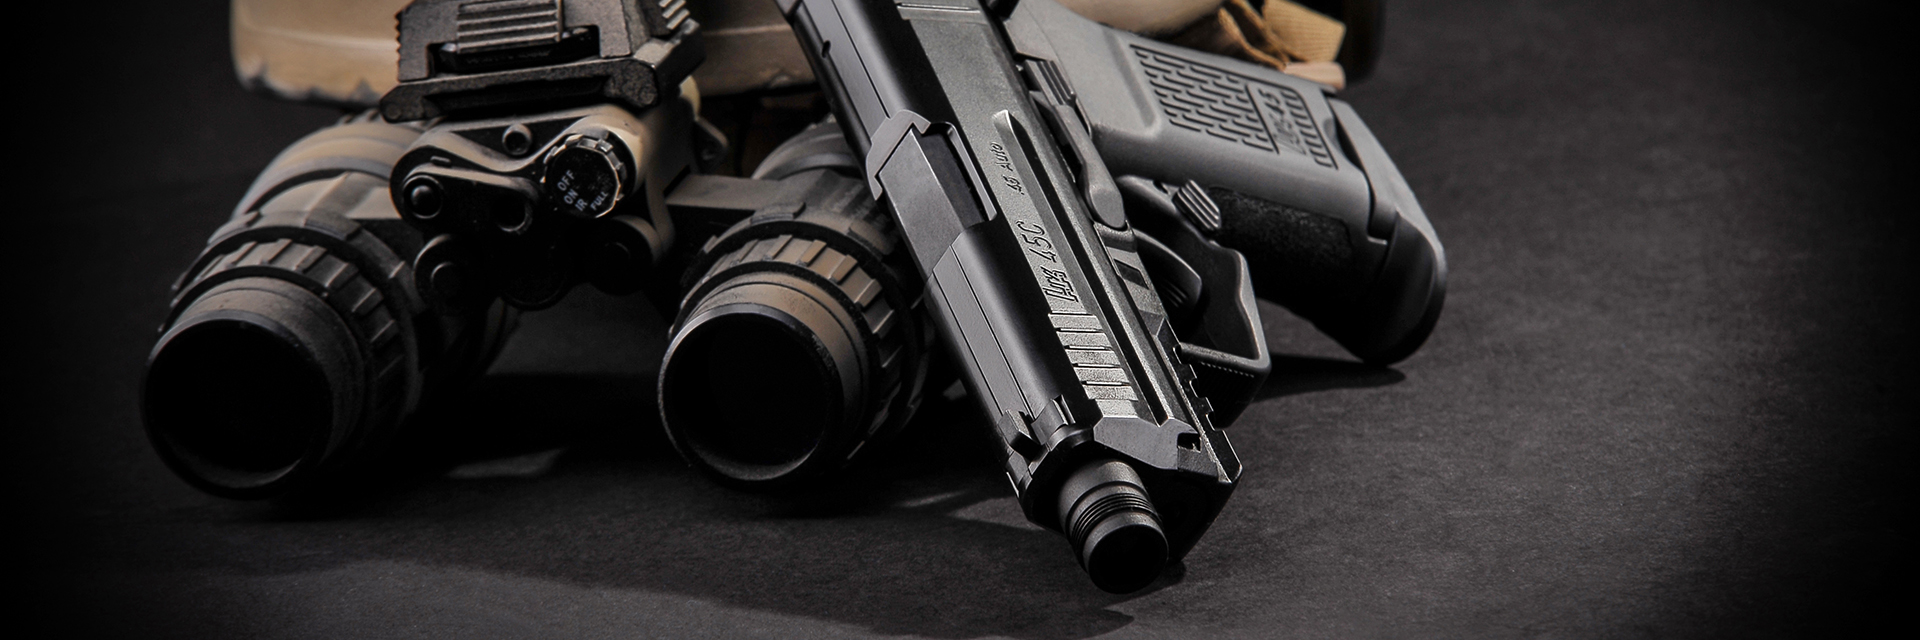 Umarex pistola a gas HK45c scarrellante (tan)-airsoft custom e militaria  professionale